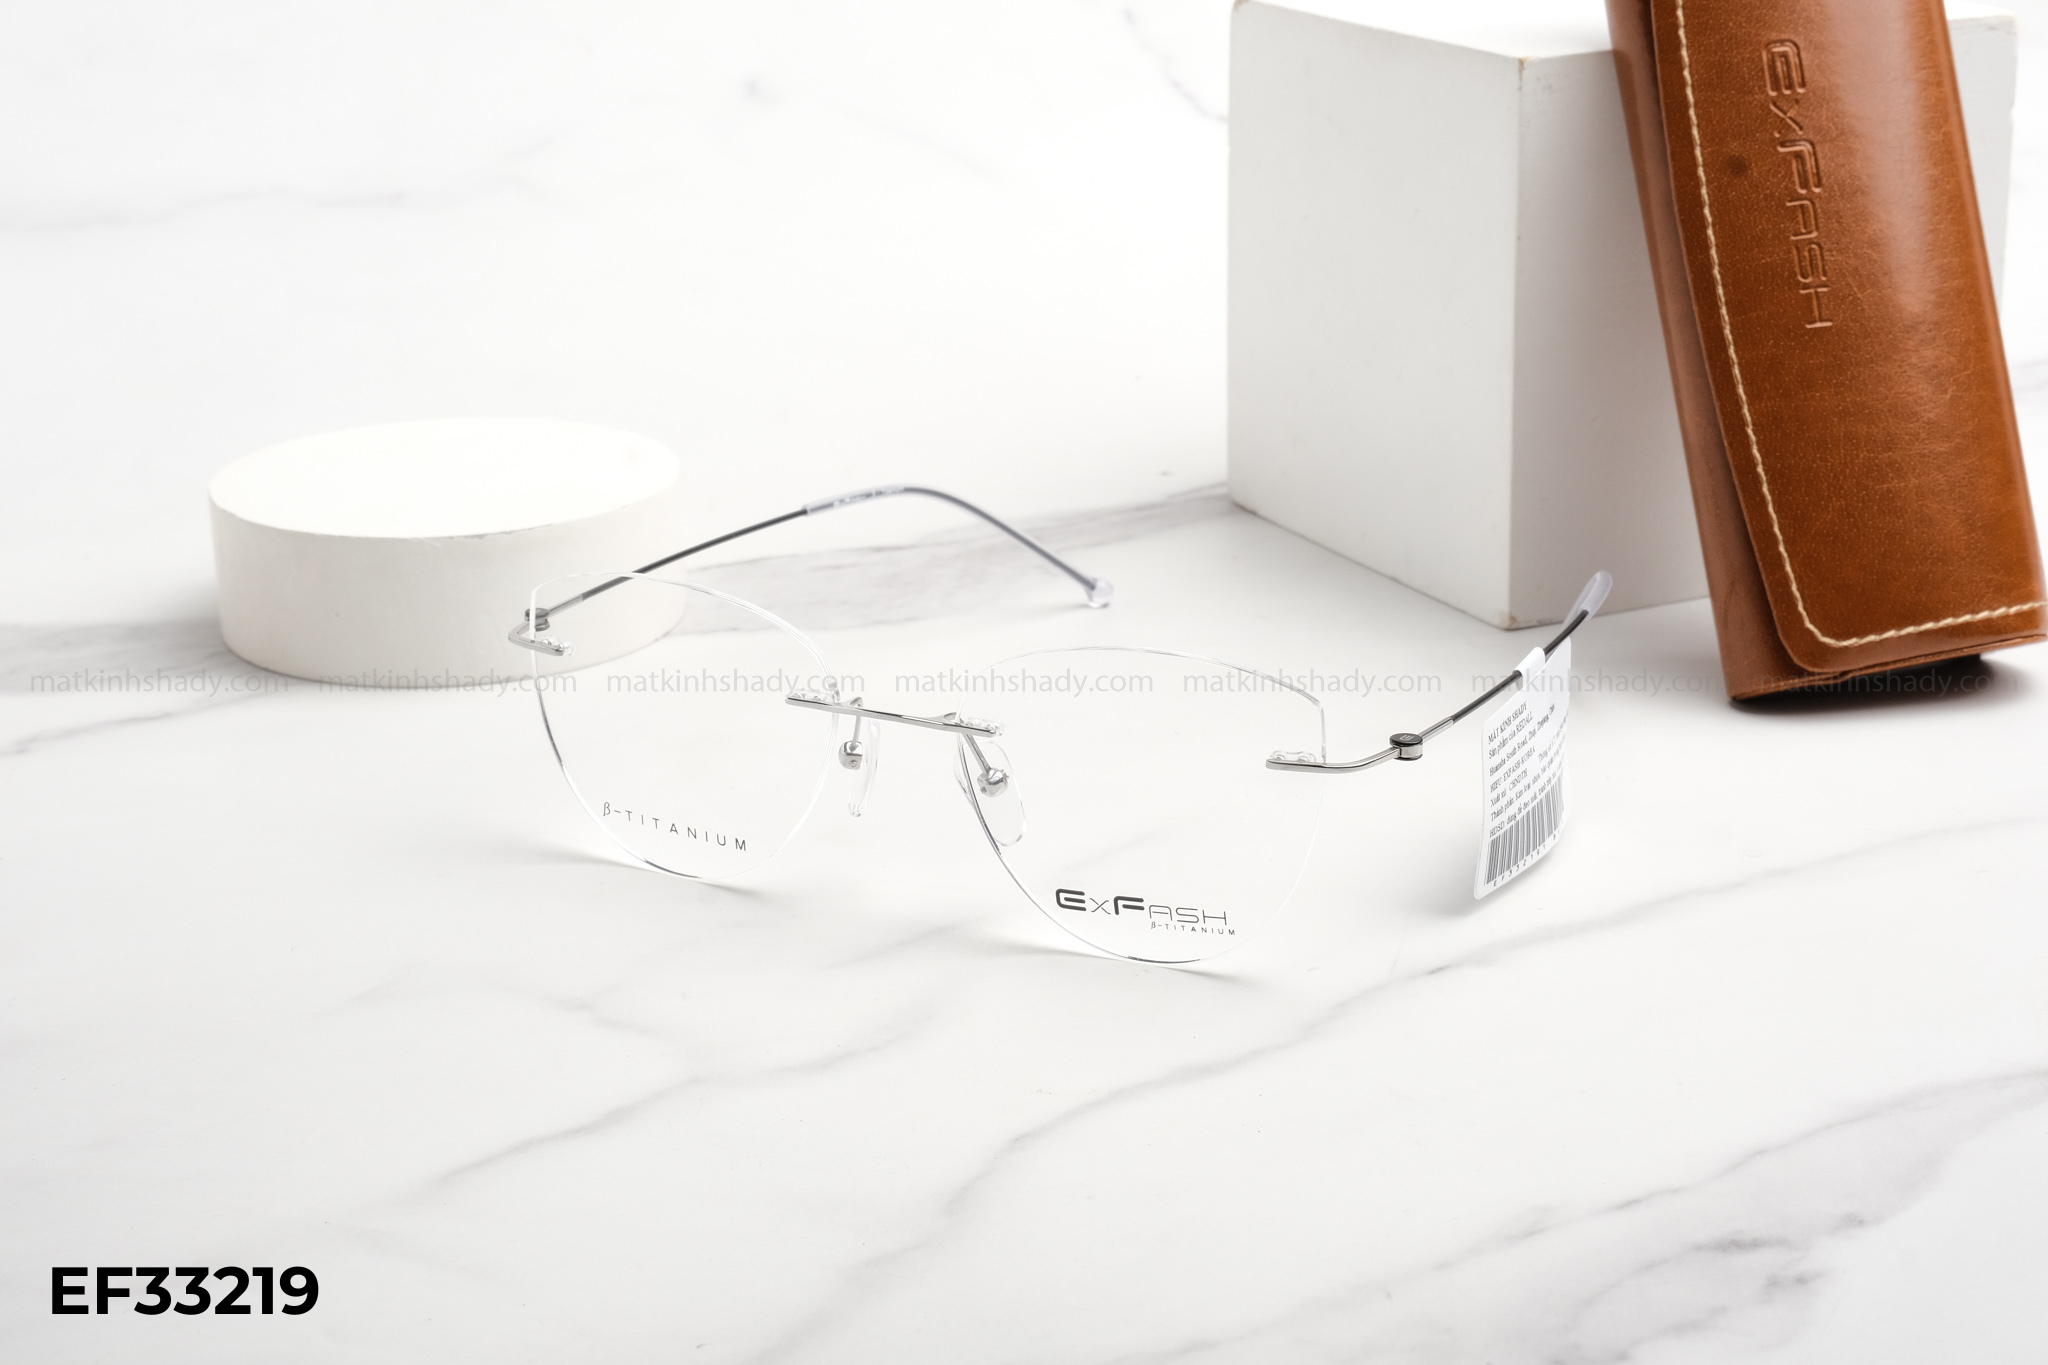  Exfash Eyewear - Glasses - EF33219 